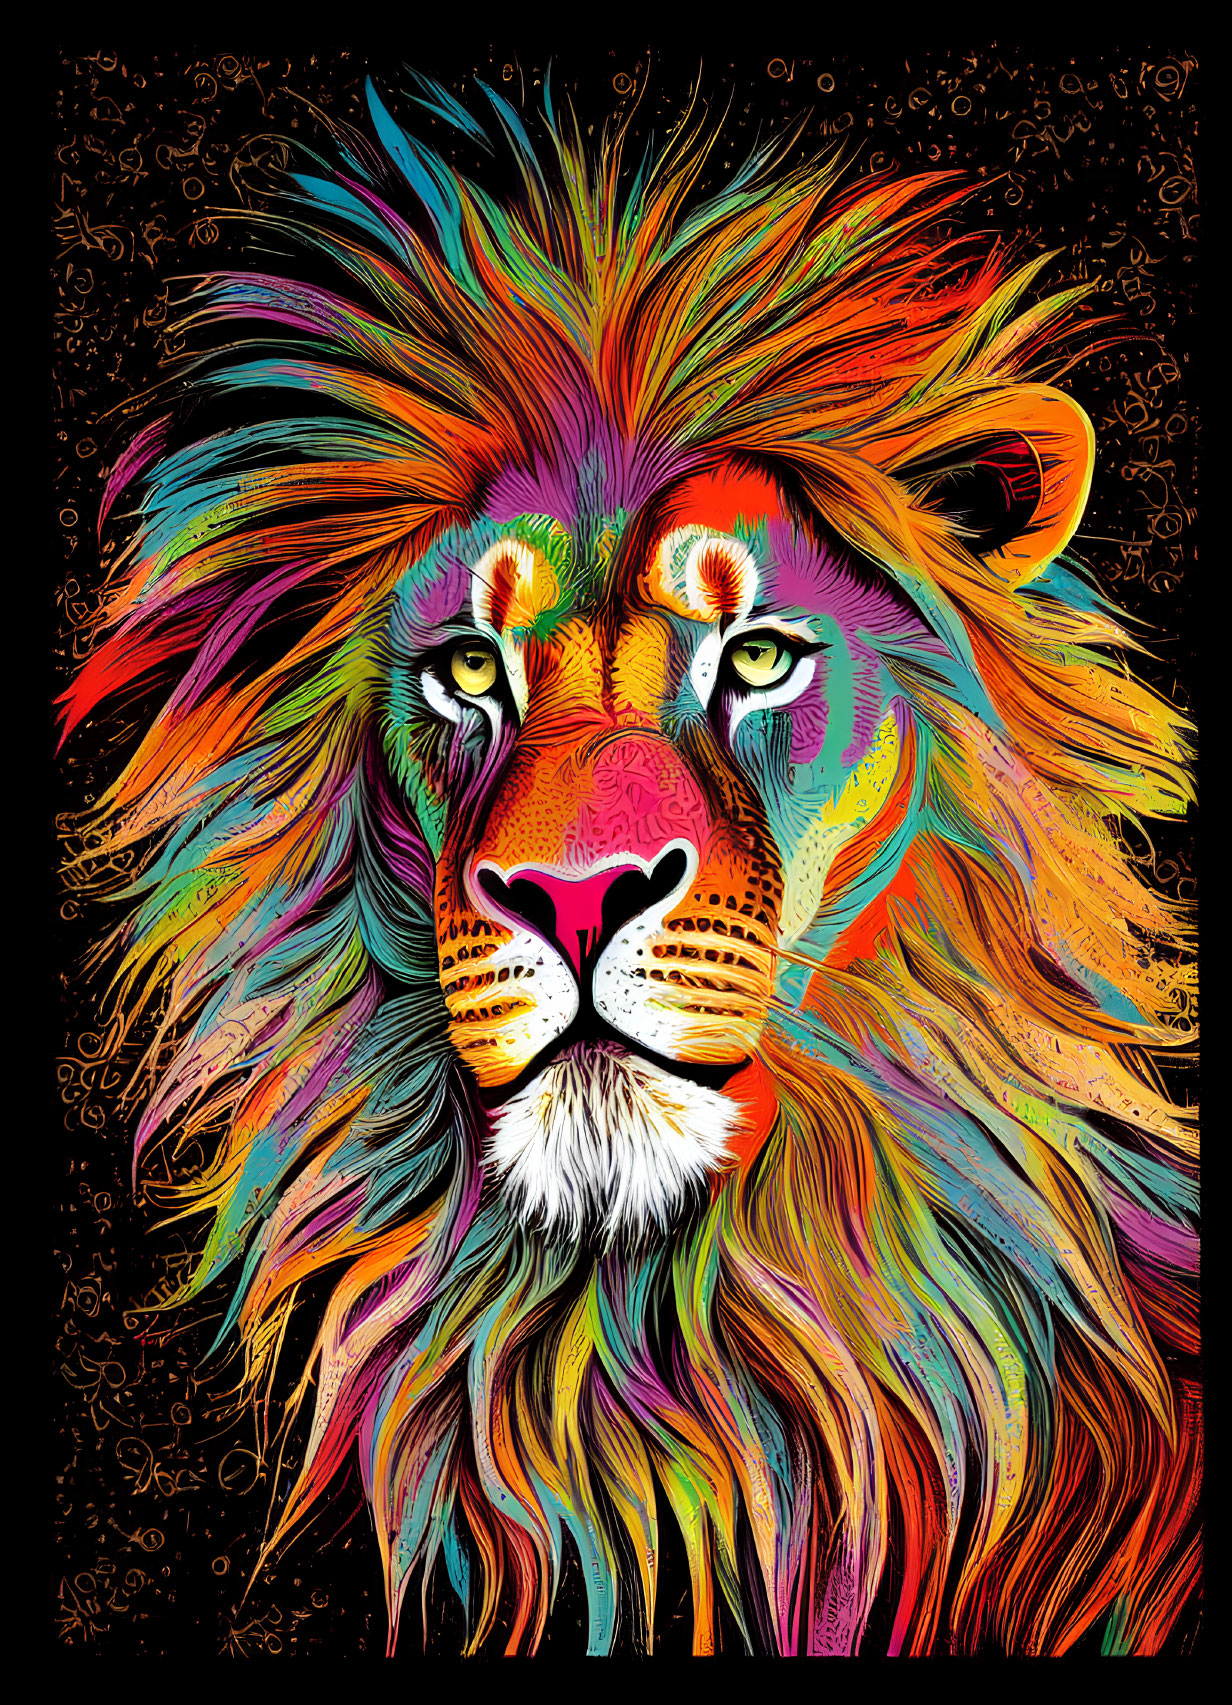 Colorful Lion Head Illustration on Dark Background